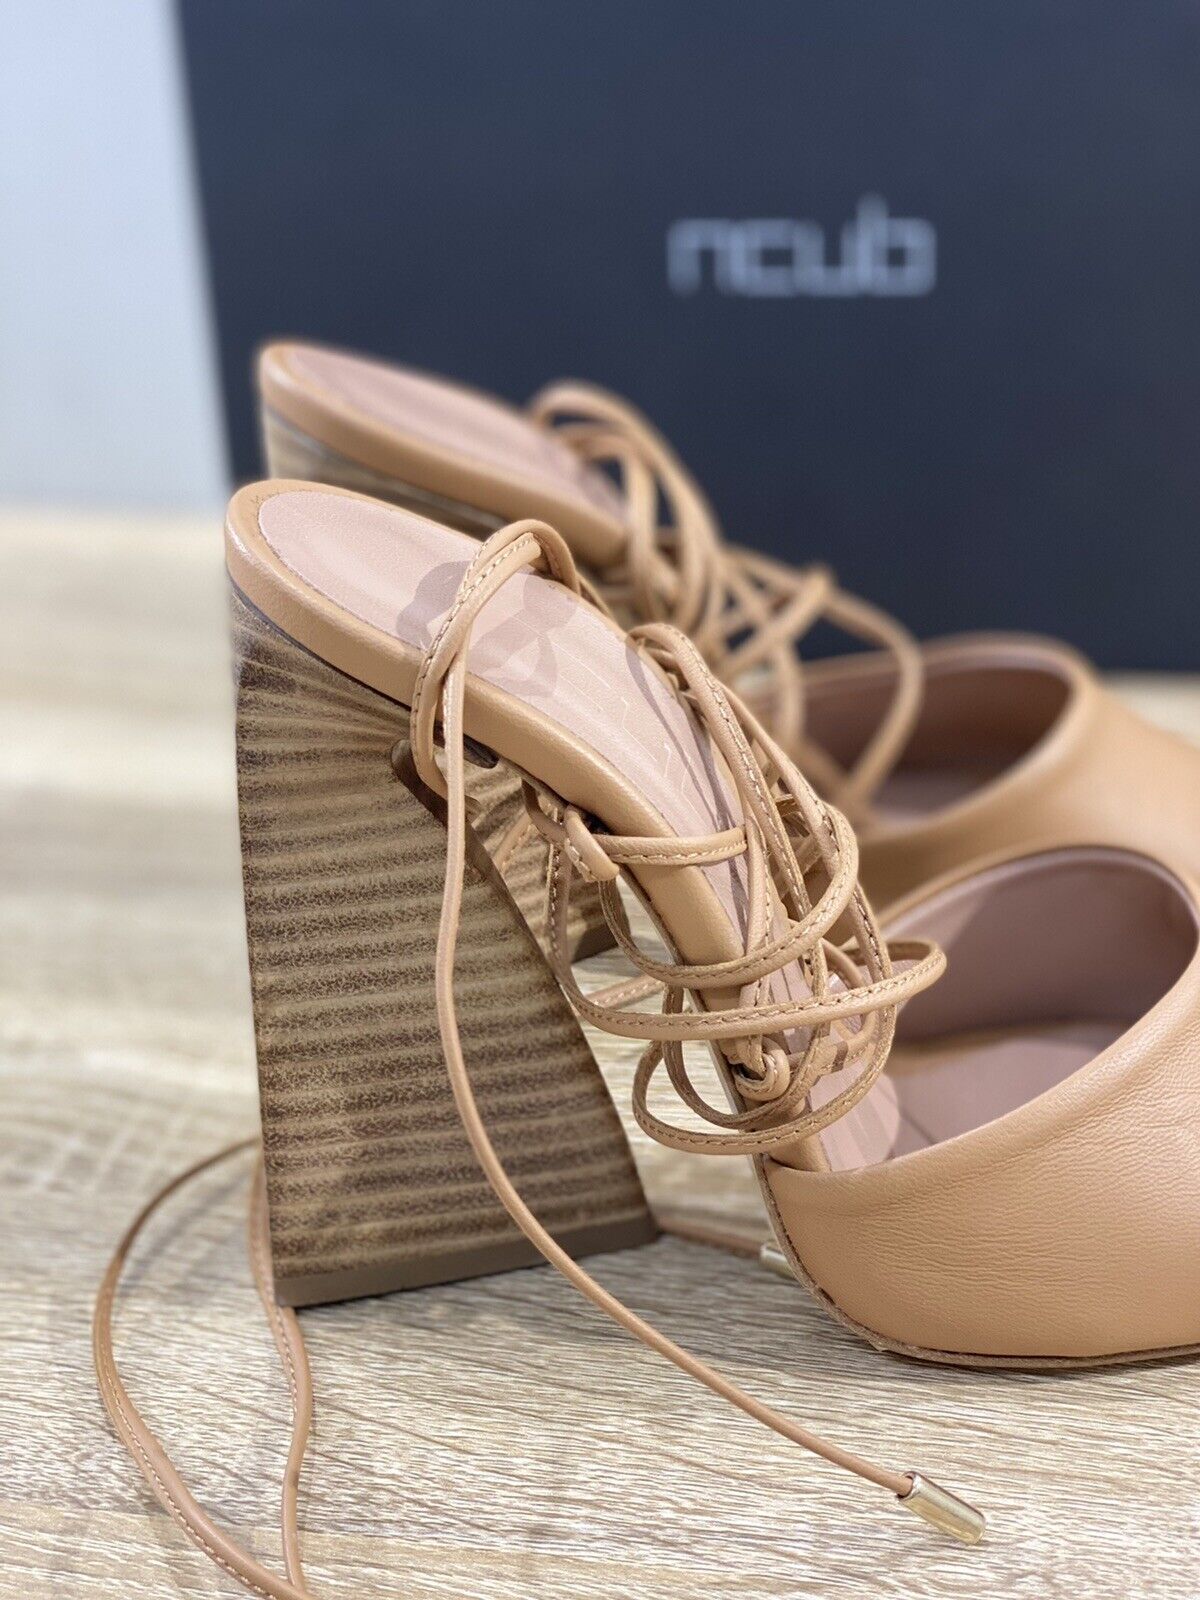 Ncub Sandalo donna Wendy 40 luxury sandal NCub Pelle Cuoio 39